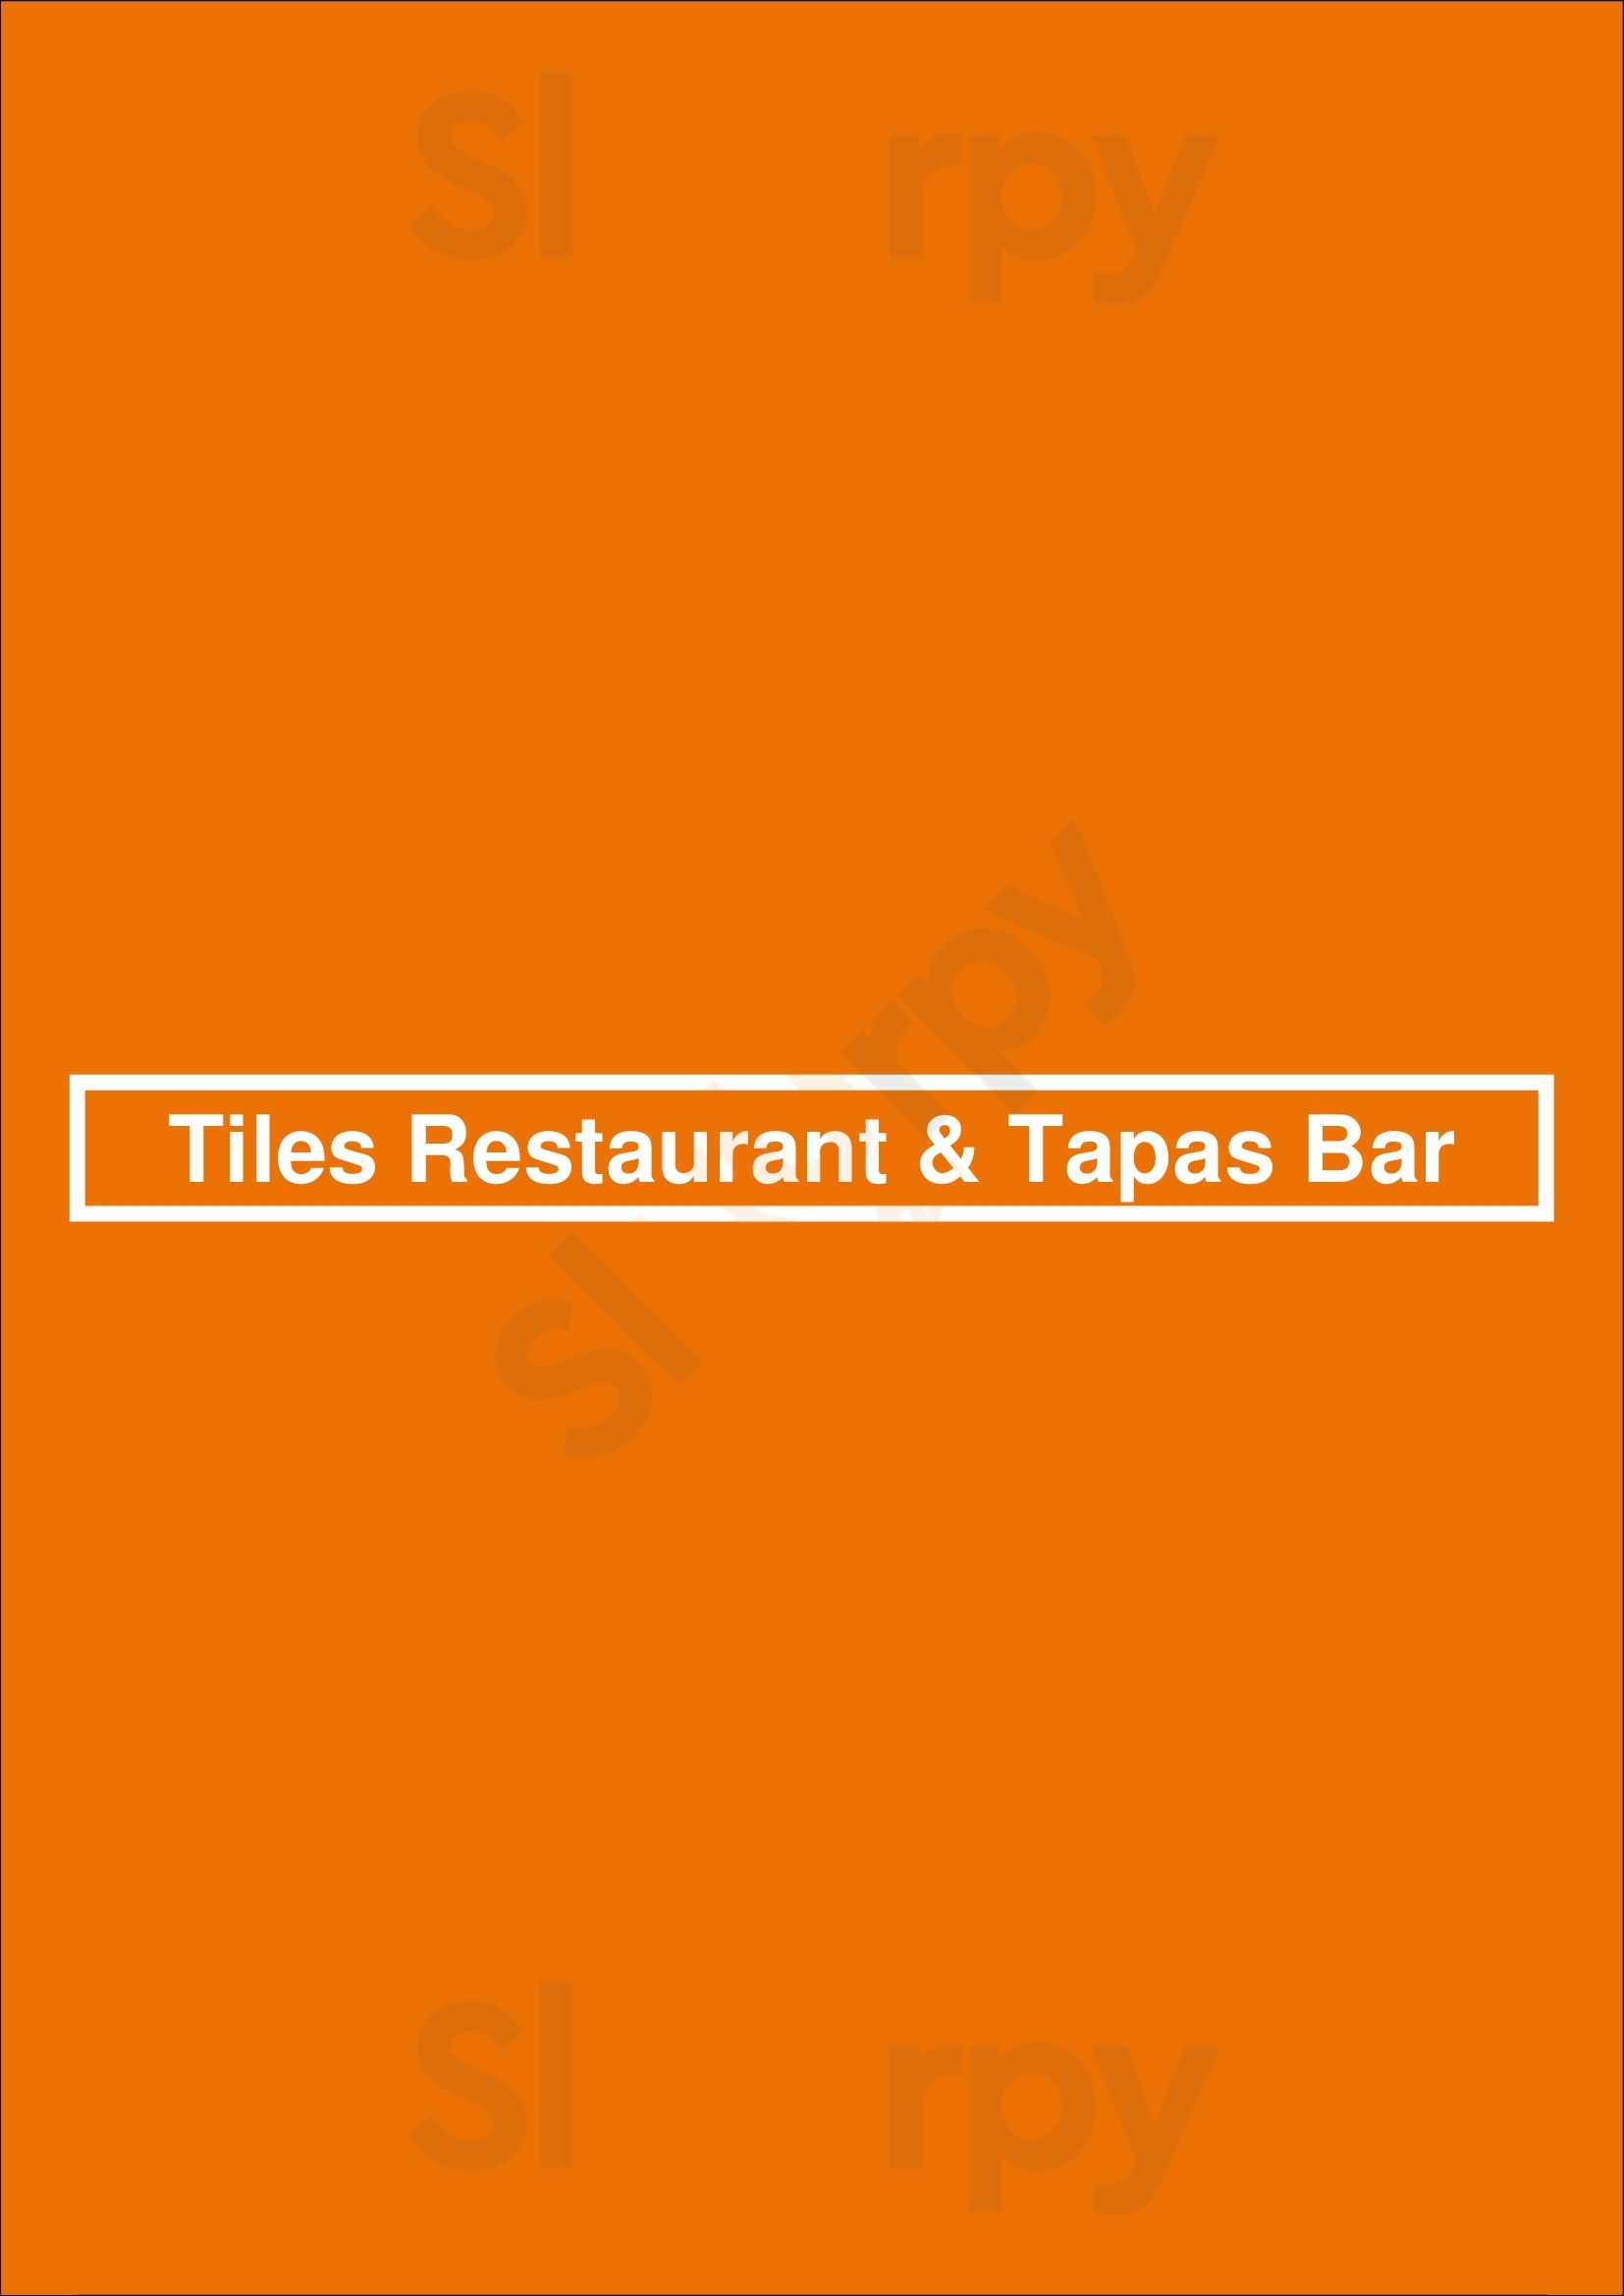 Tiles Restaurant & Tapas Bar Lisboa Menu - 1